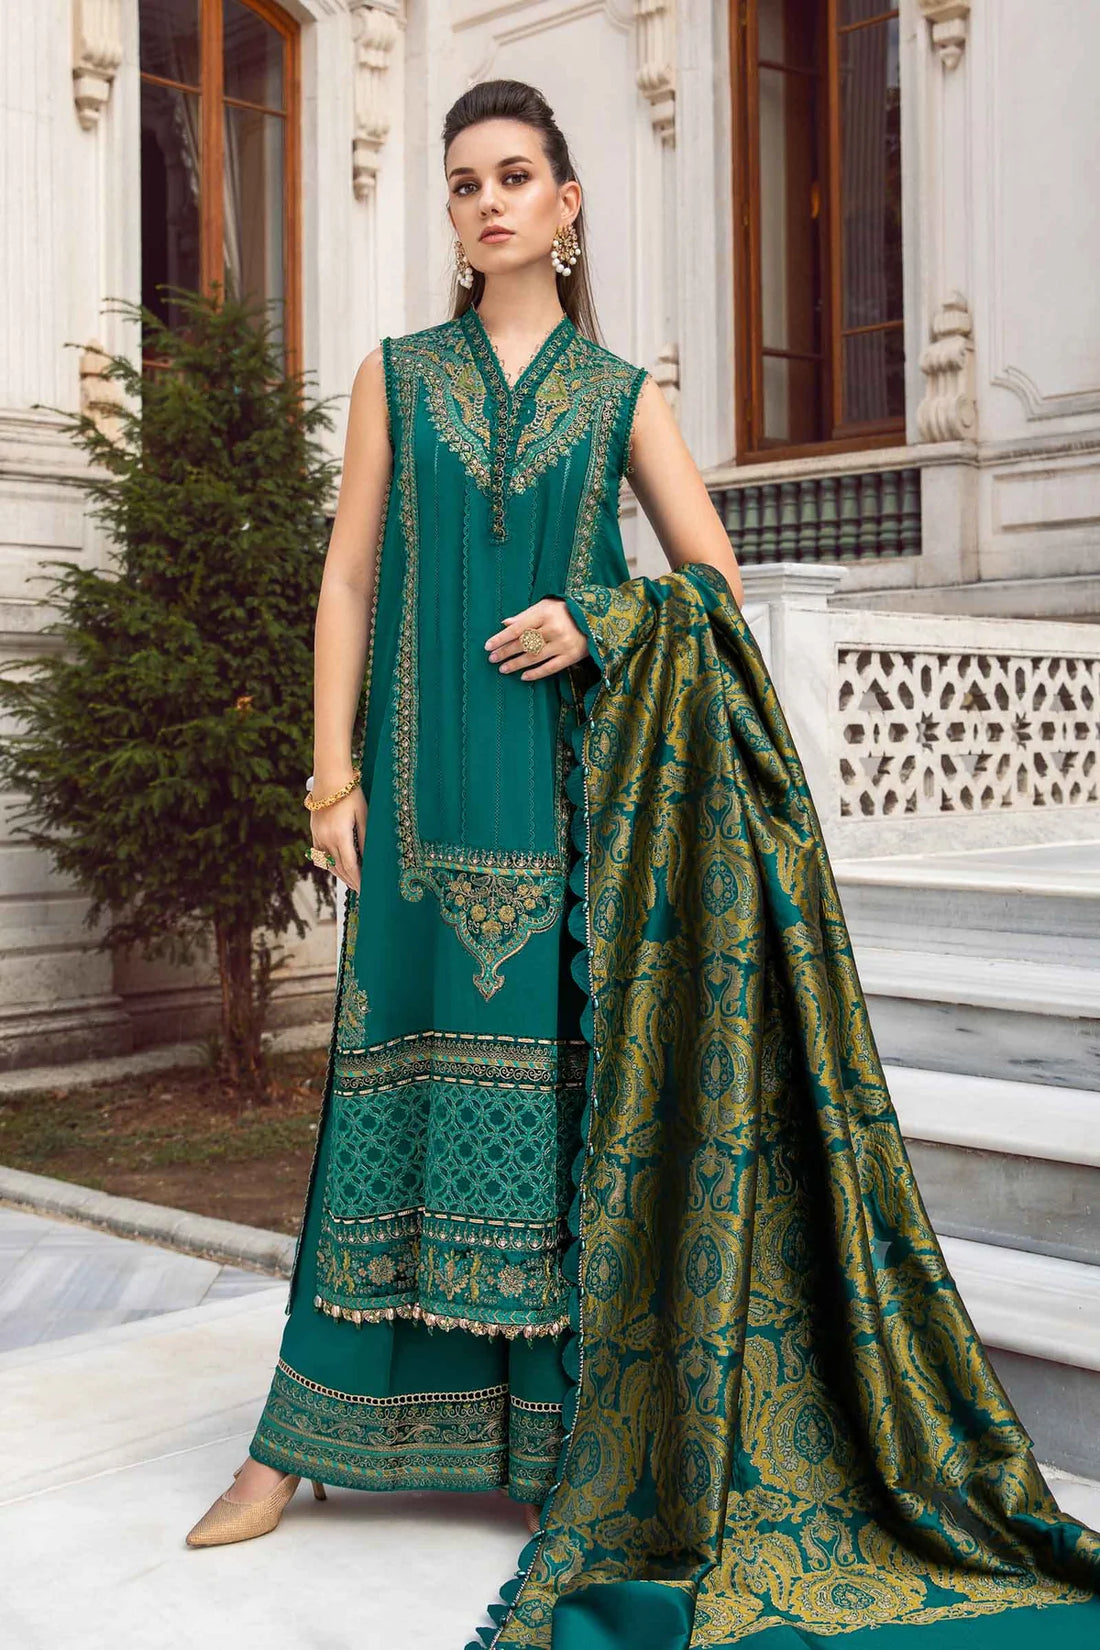 Maria B | Linen 23 | Emerald Green DL-1107 - Khanumjan  Pakistani Clothes and Designer Dresses in UK, USA 